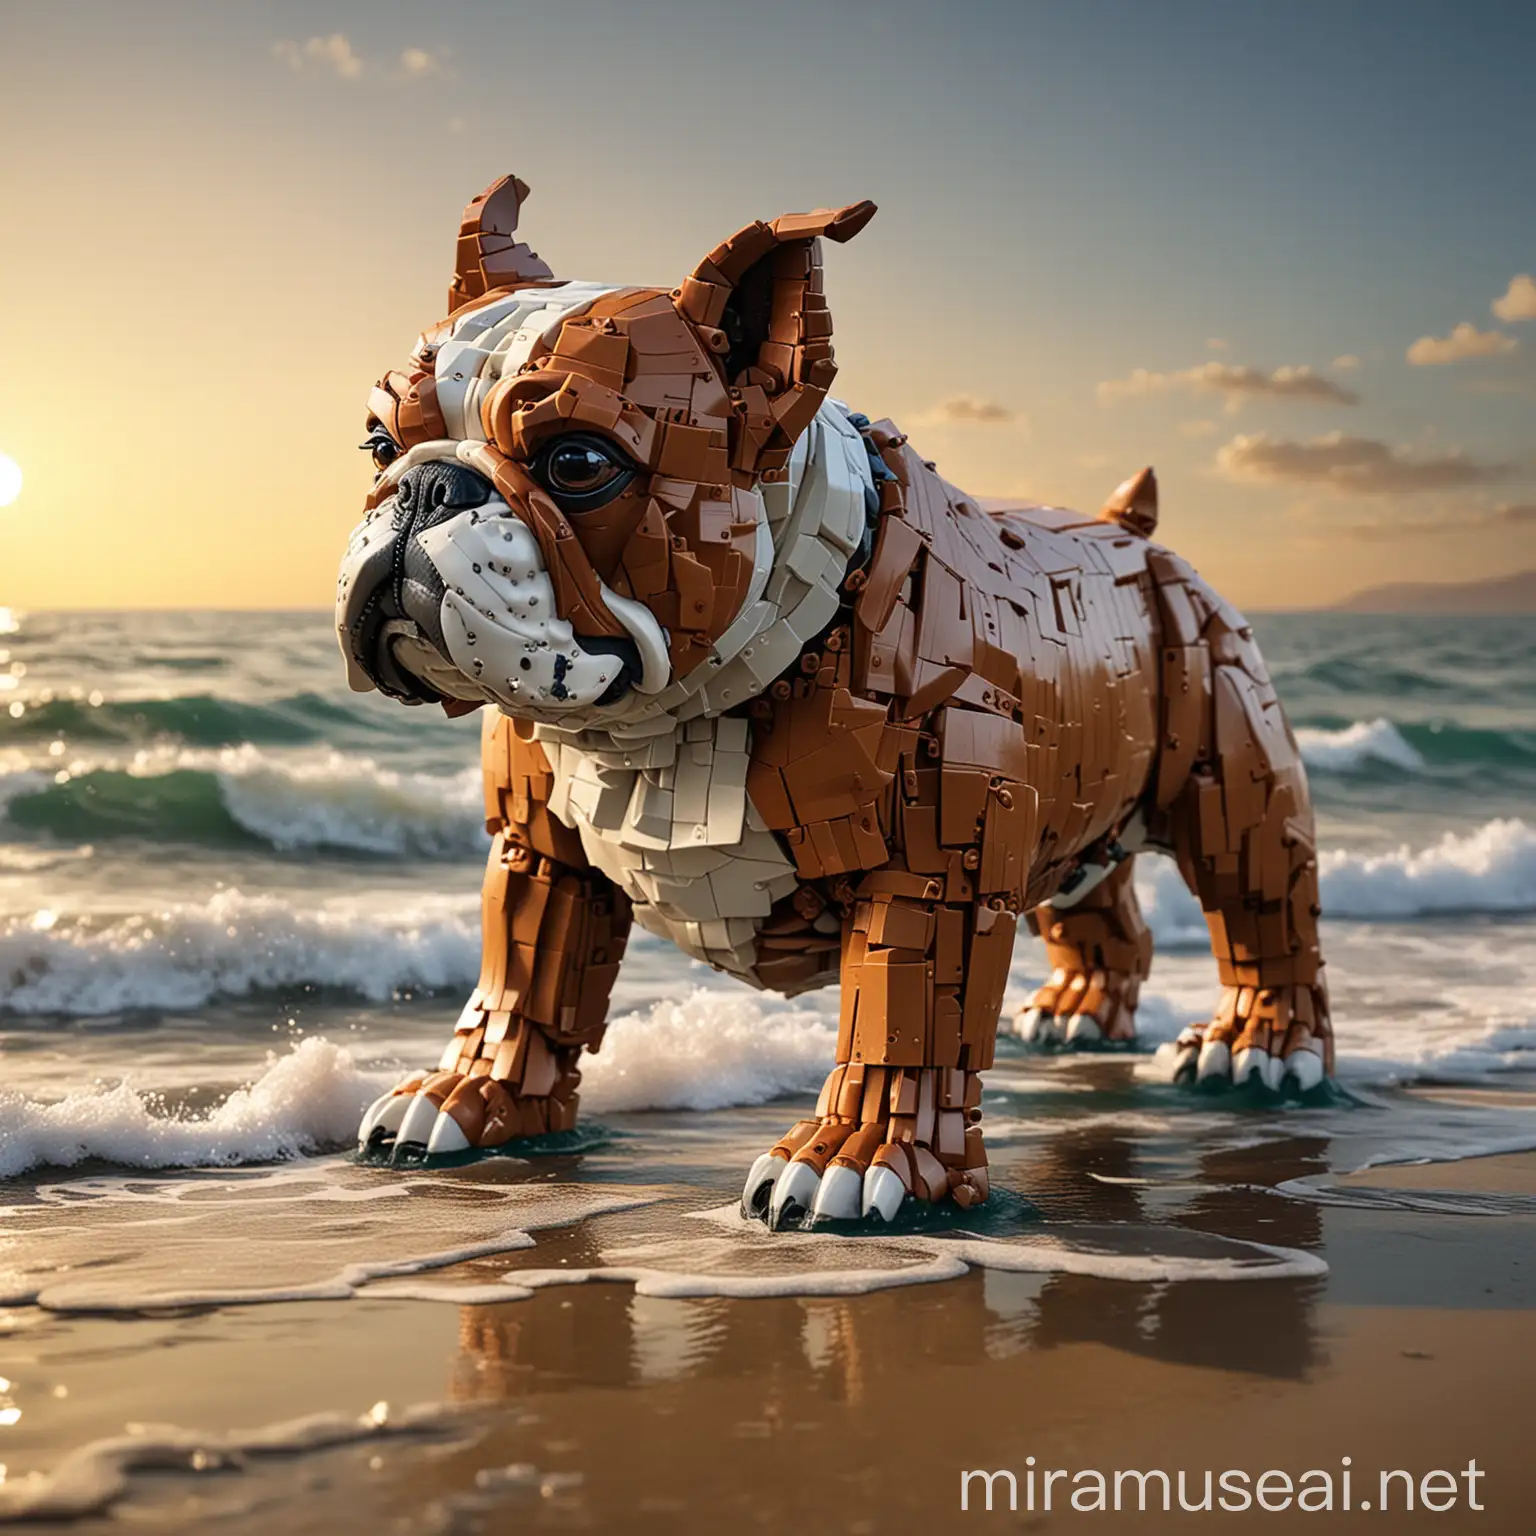 bull dog francés mirando al mar a contraluz hiperrealista, estilo Lego